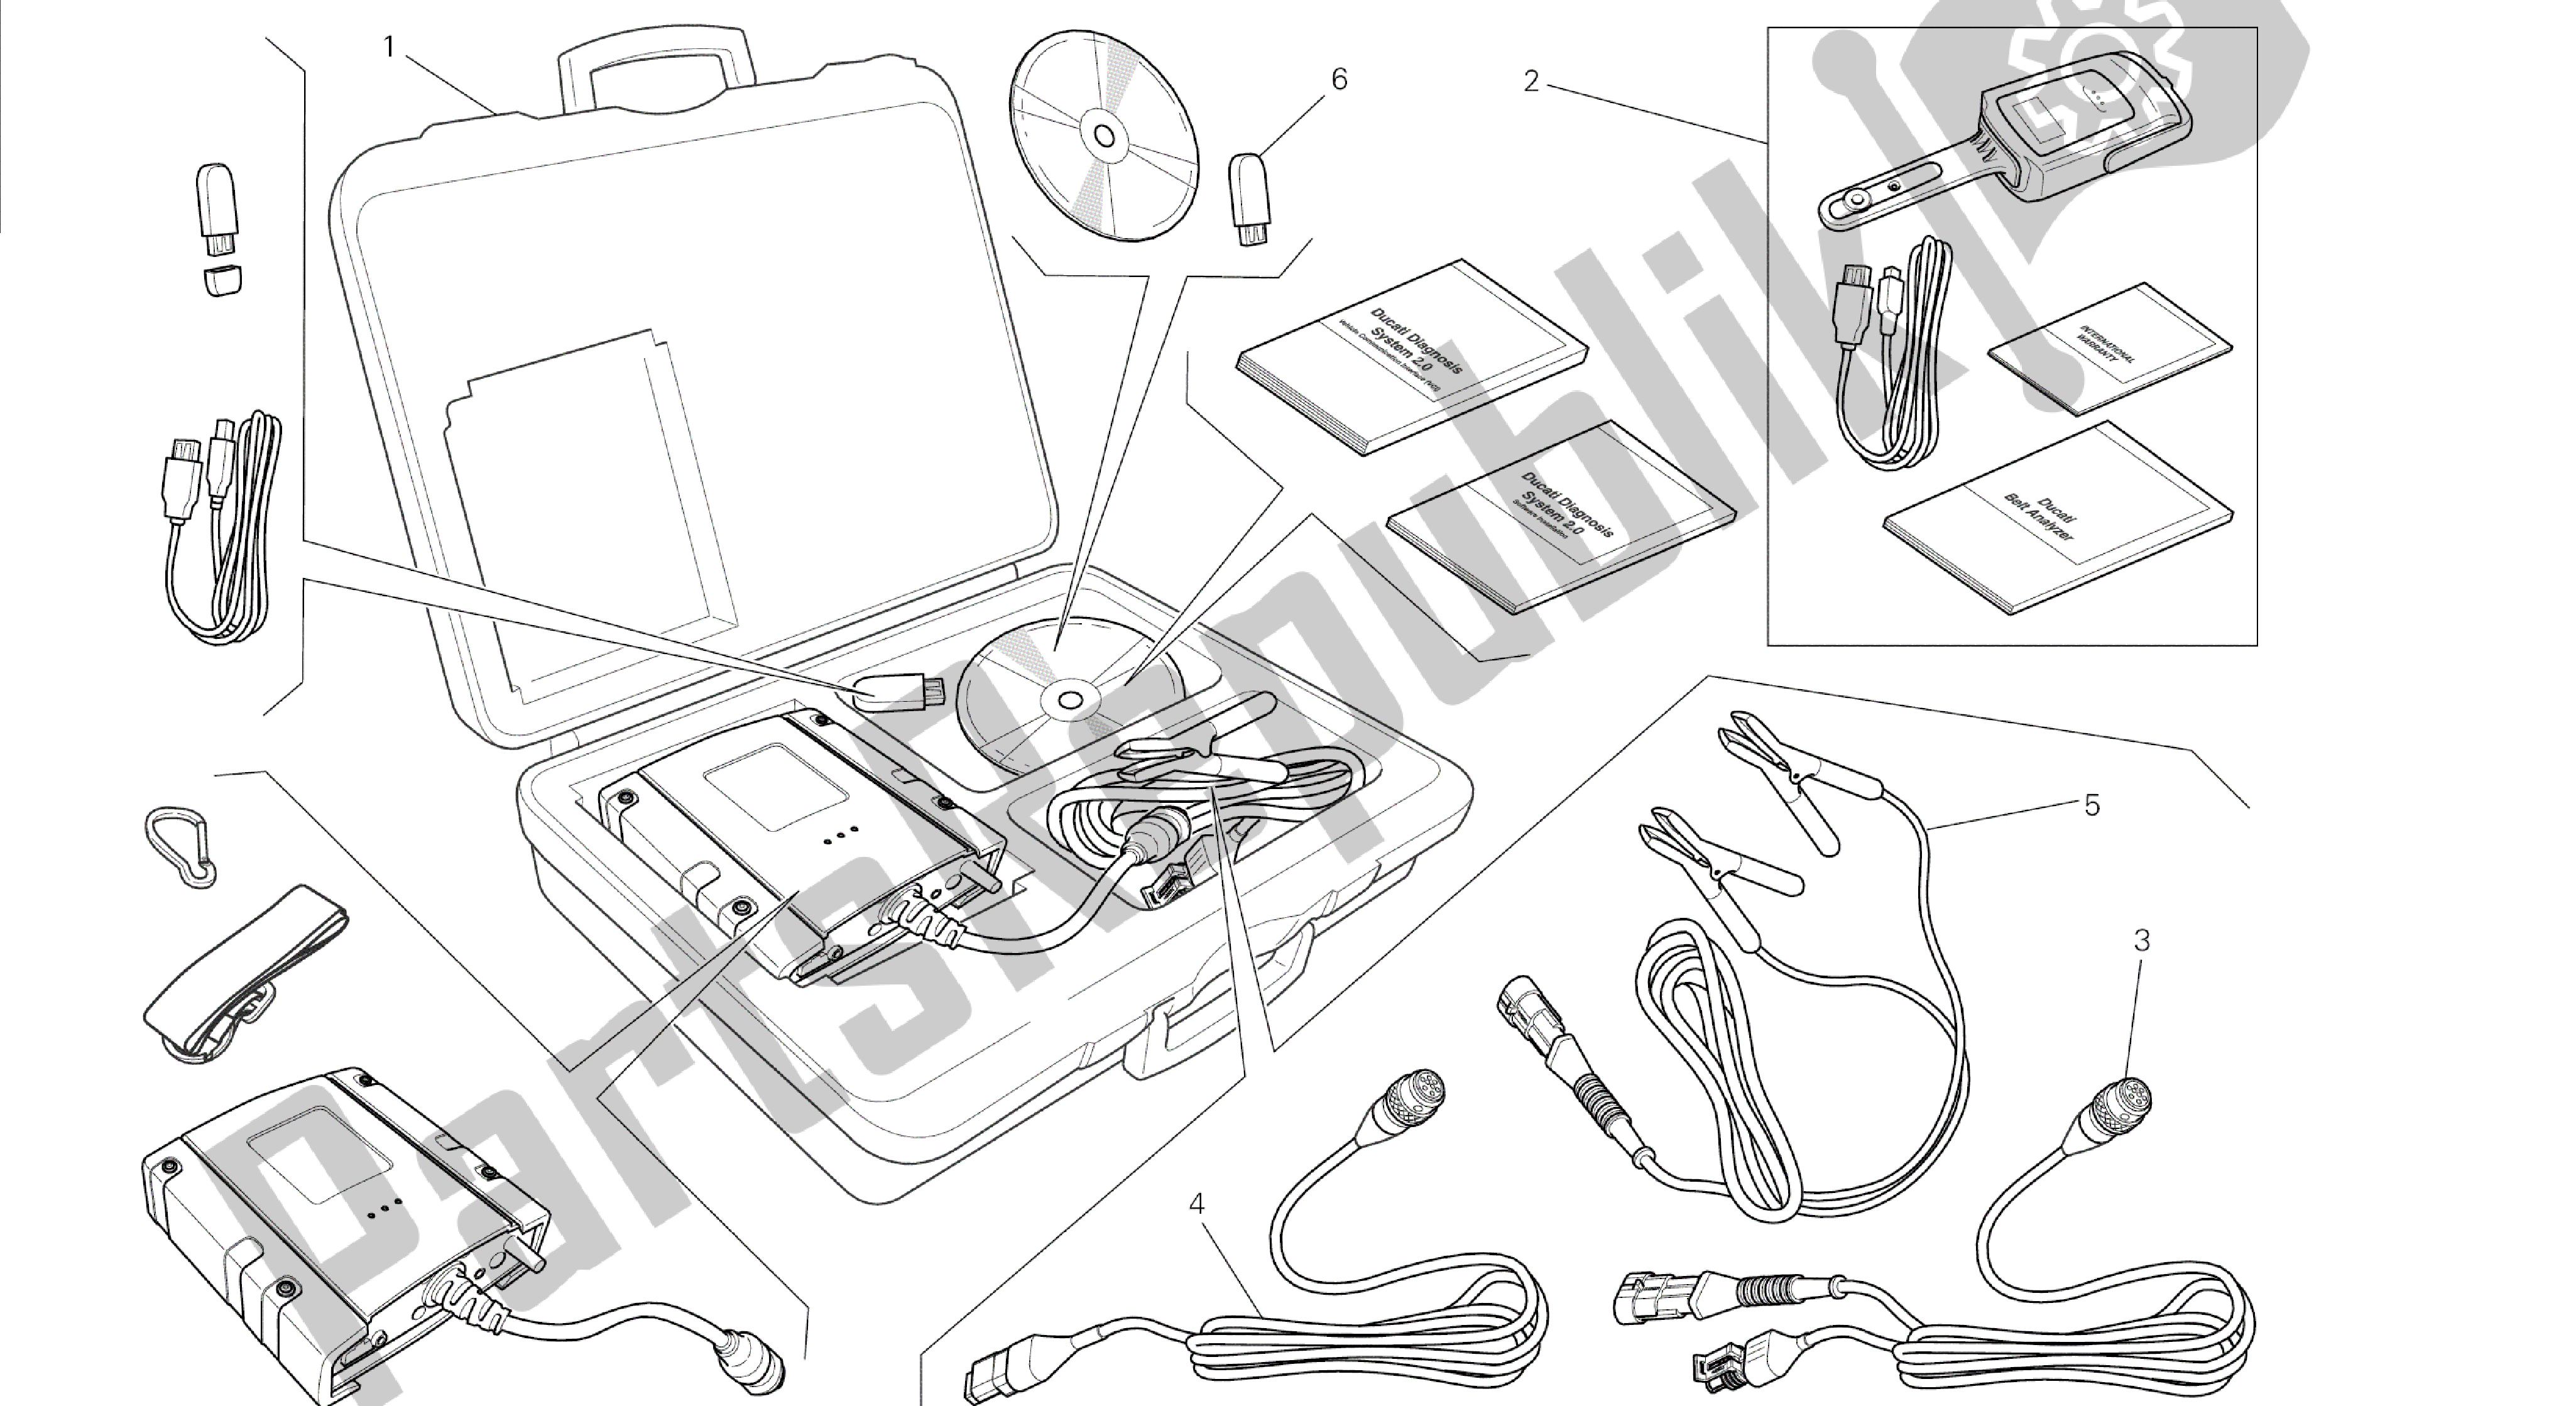 Todas las partes para Dibujo 01c - Herramientas De Grupo Dds (2) Tester [mod: Dvl] de Ducati Diavel 1200 2014